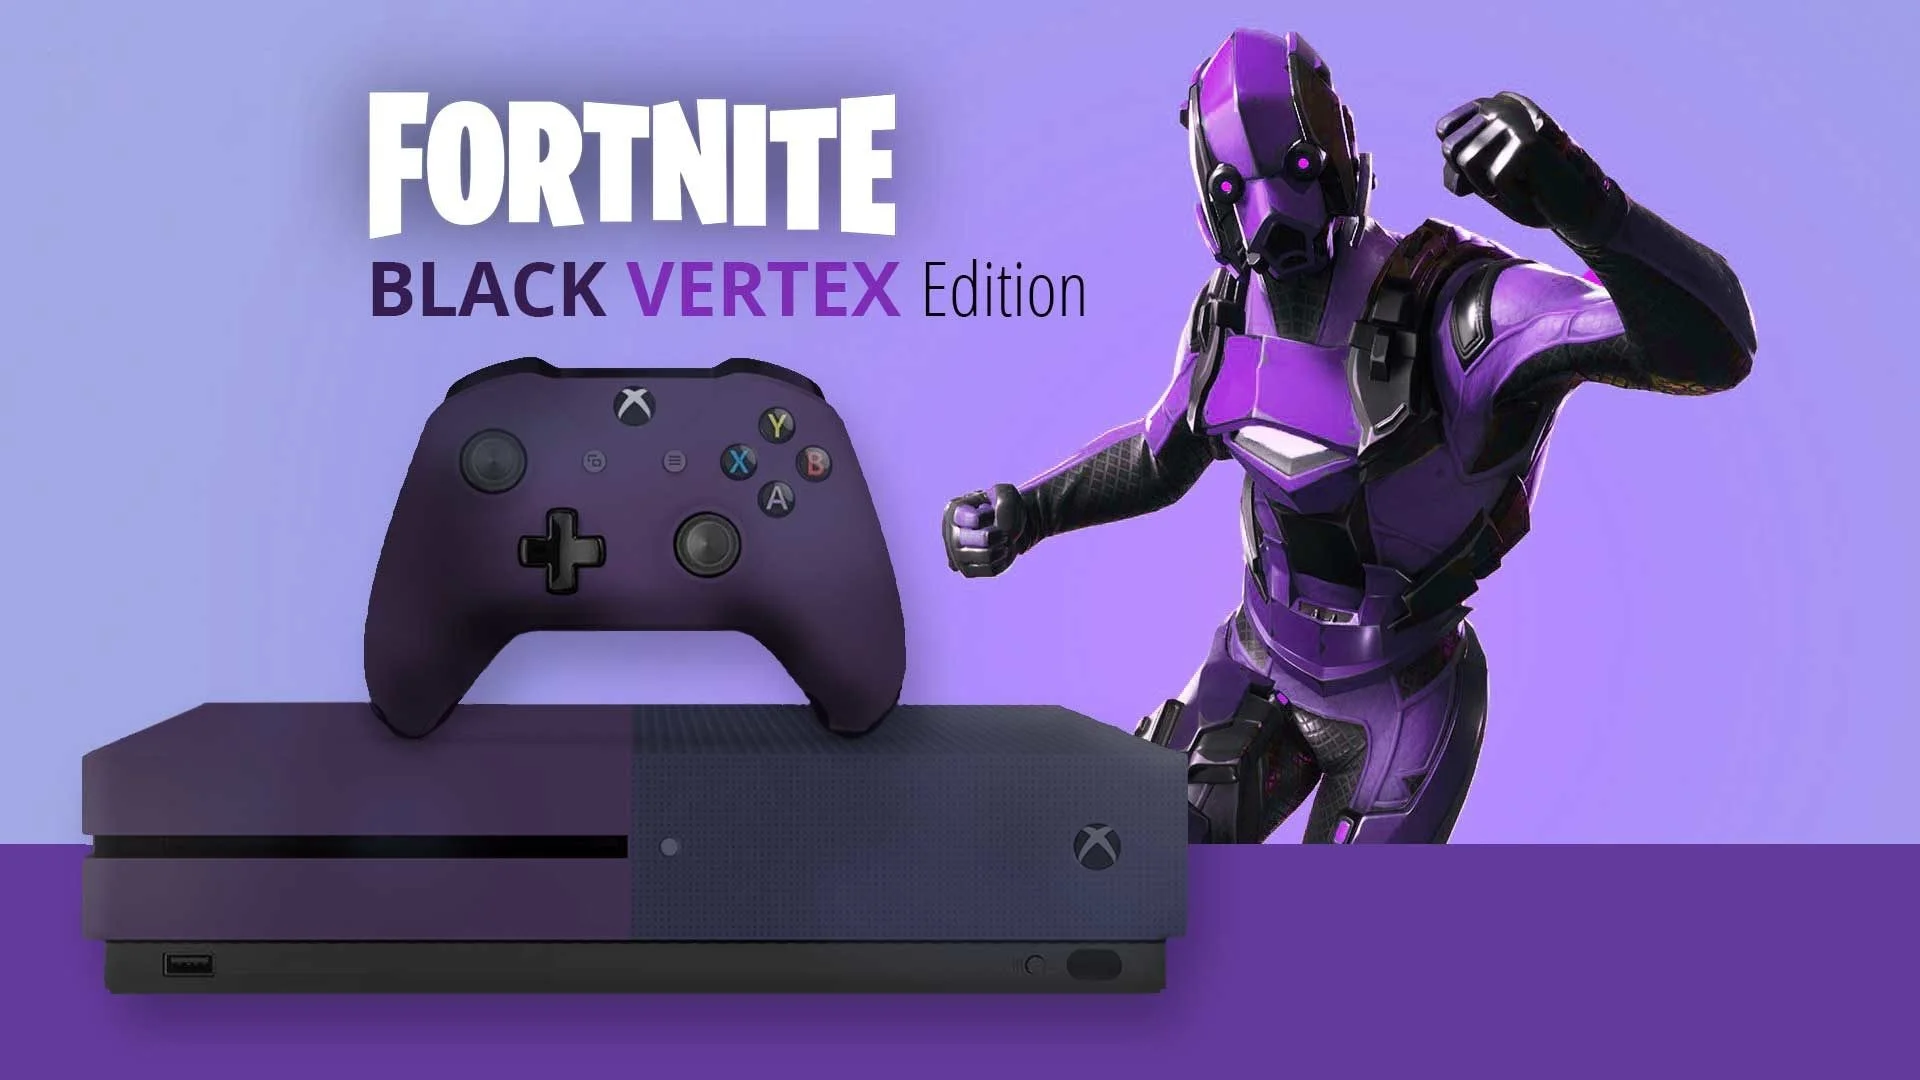 LEAKED! Xbox One S Fortnite Black Vertex Edition